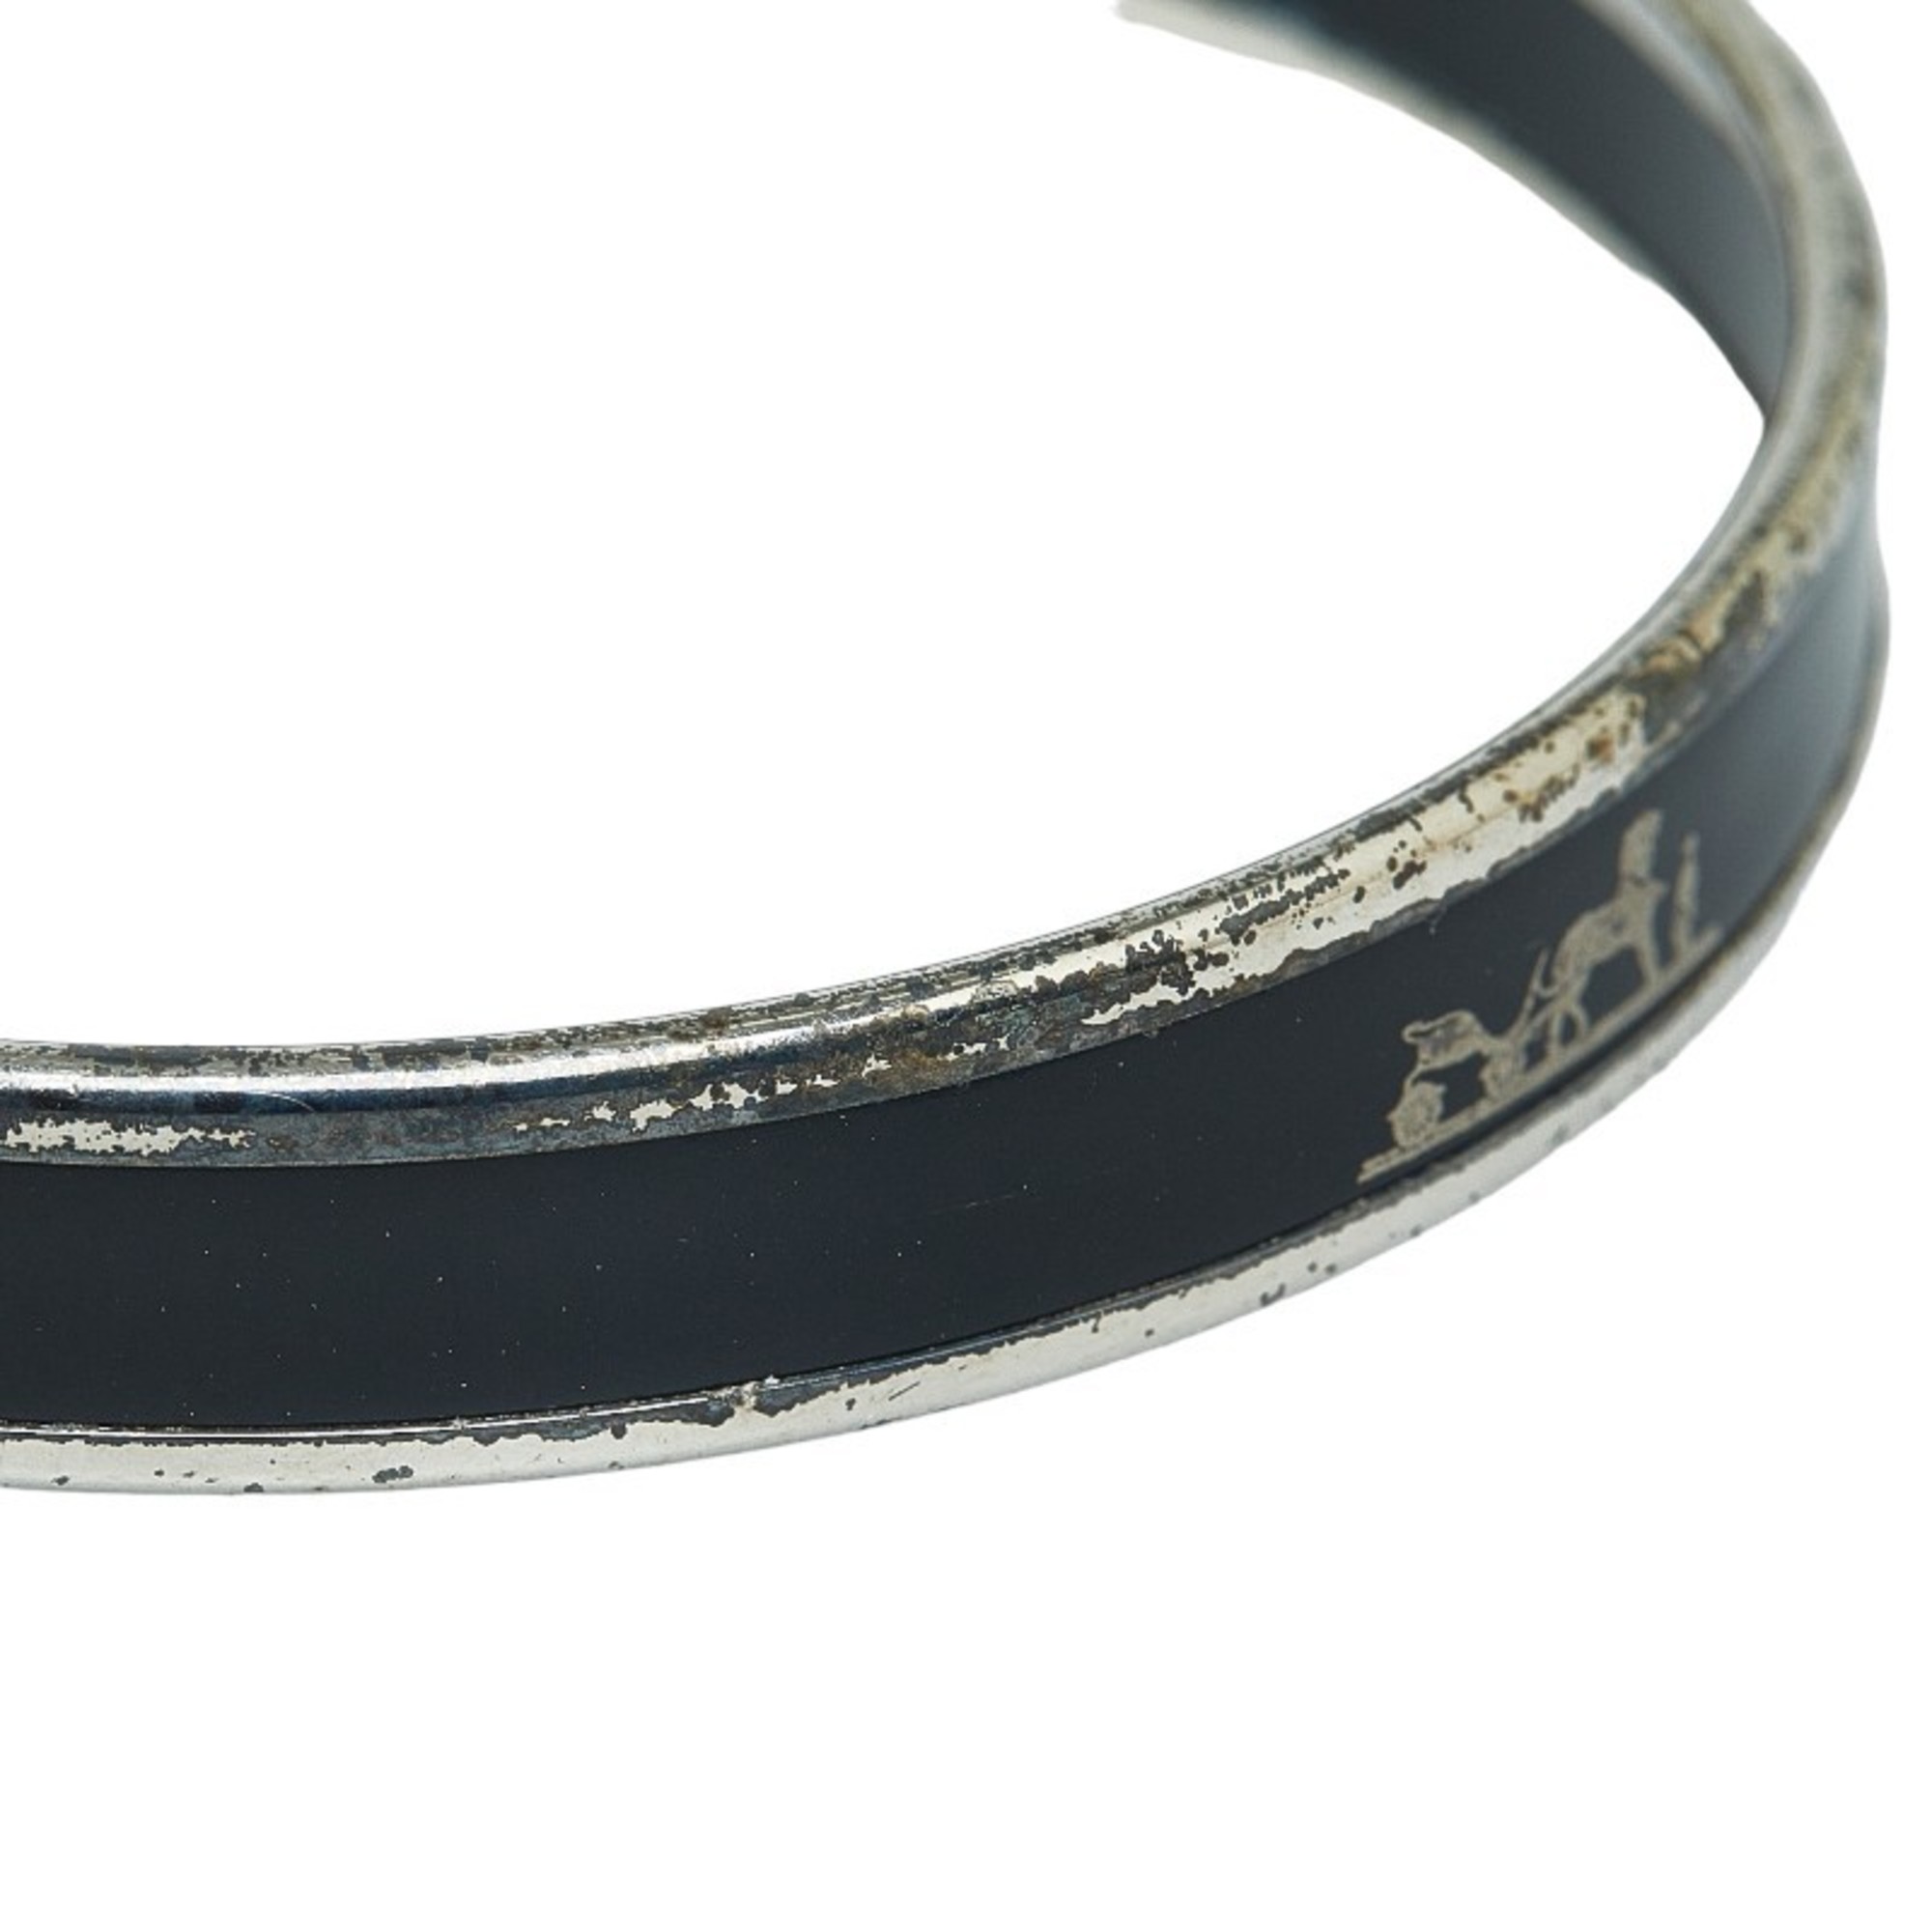 Hermes enamel PM carriage pattern bangle bracelet silver black metal women's HERMES